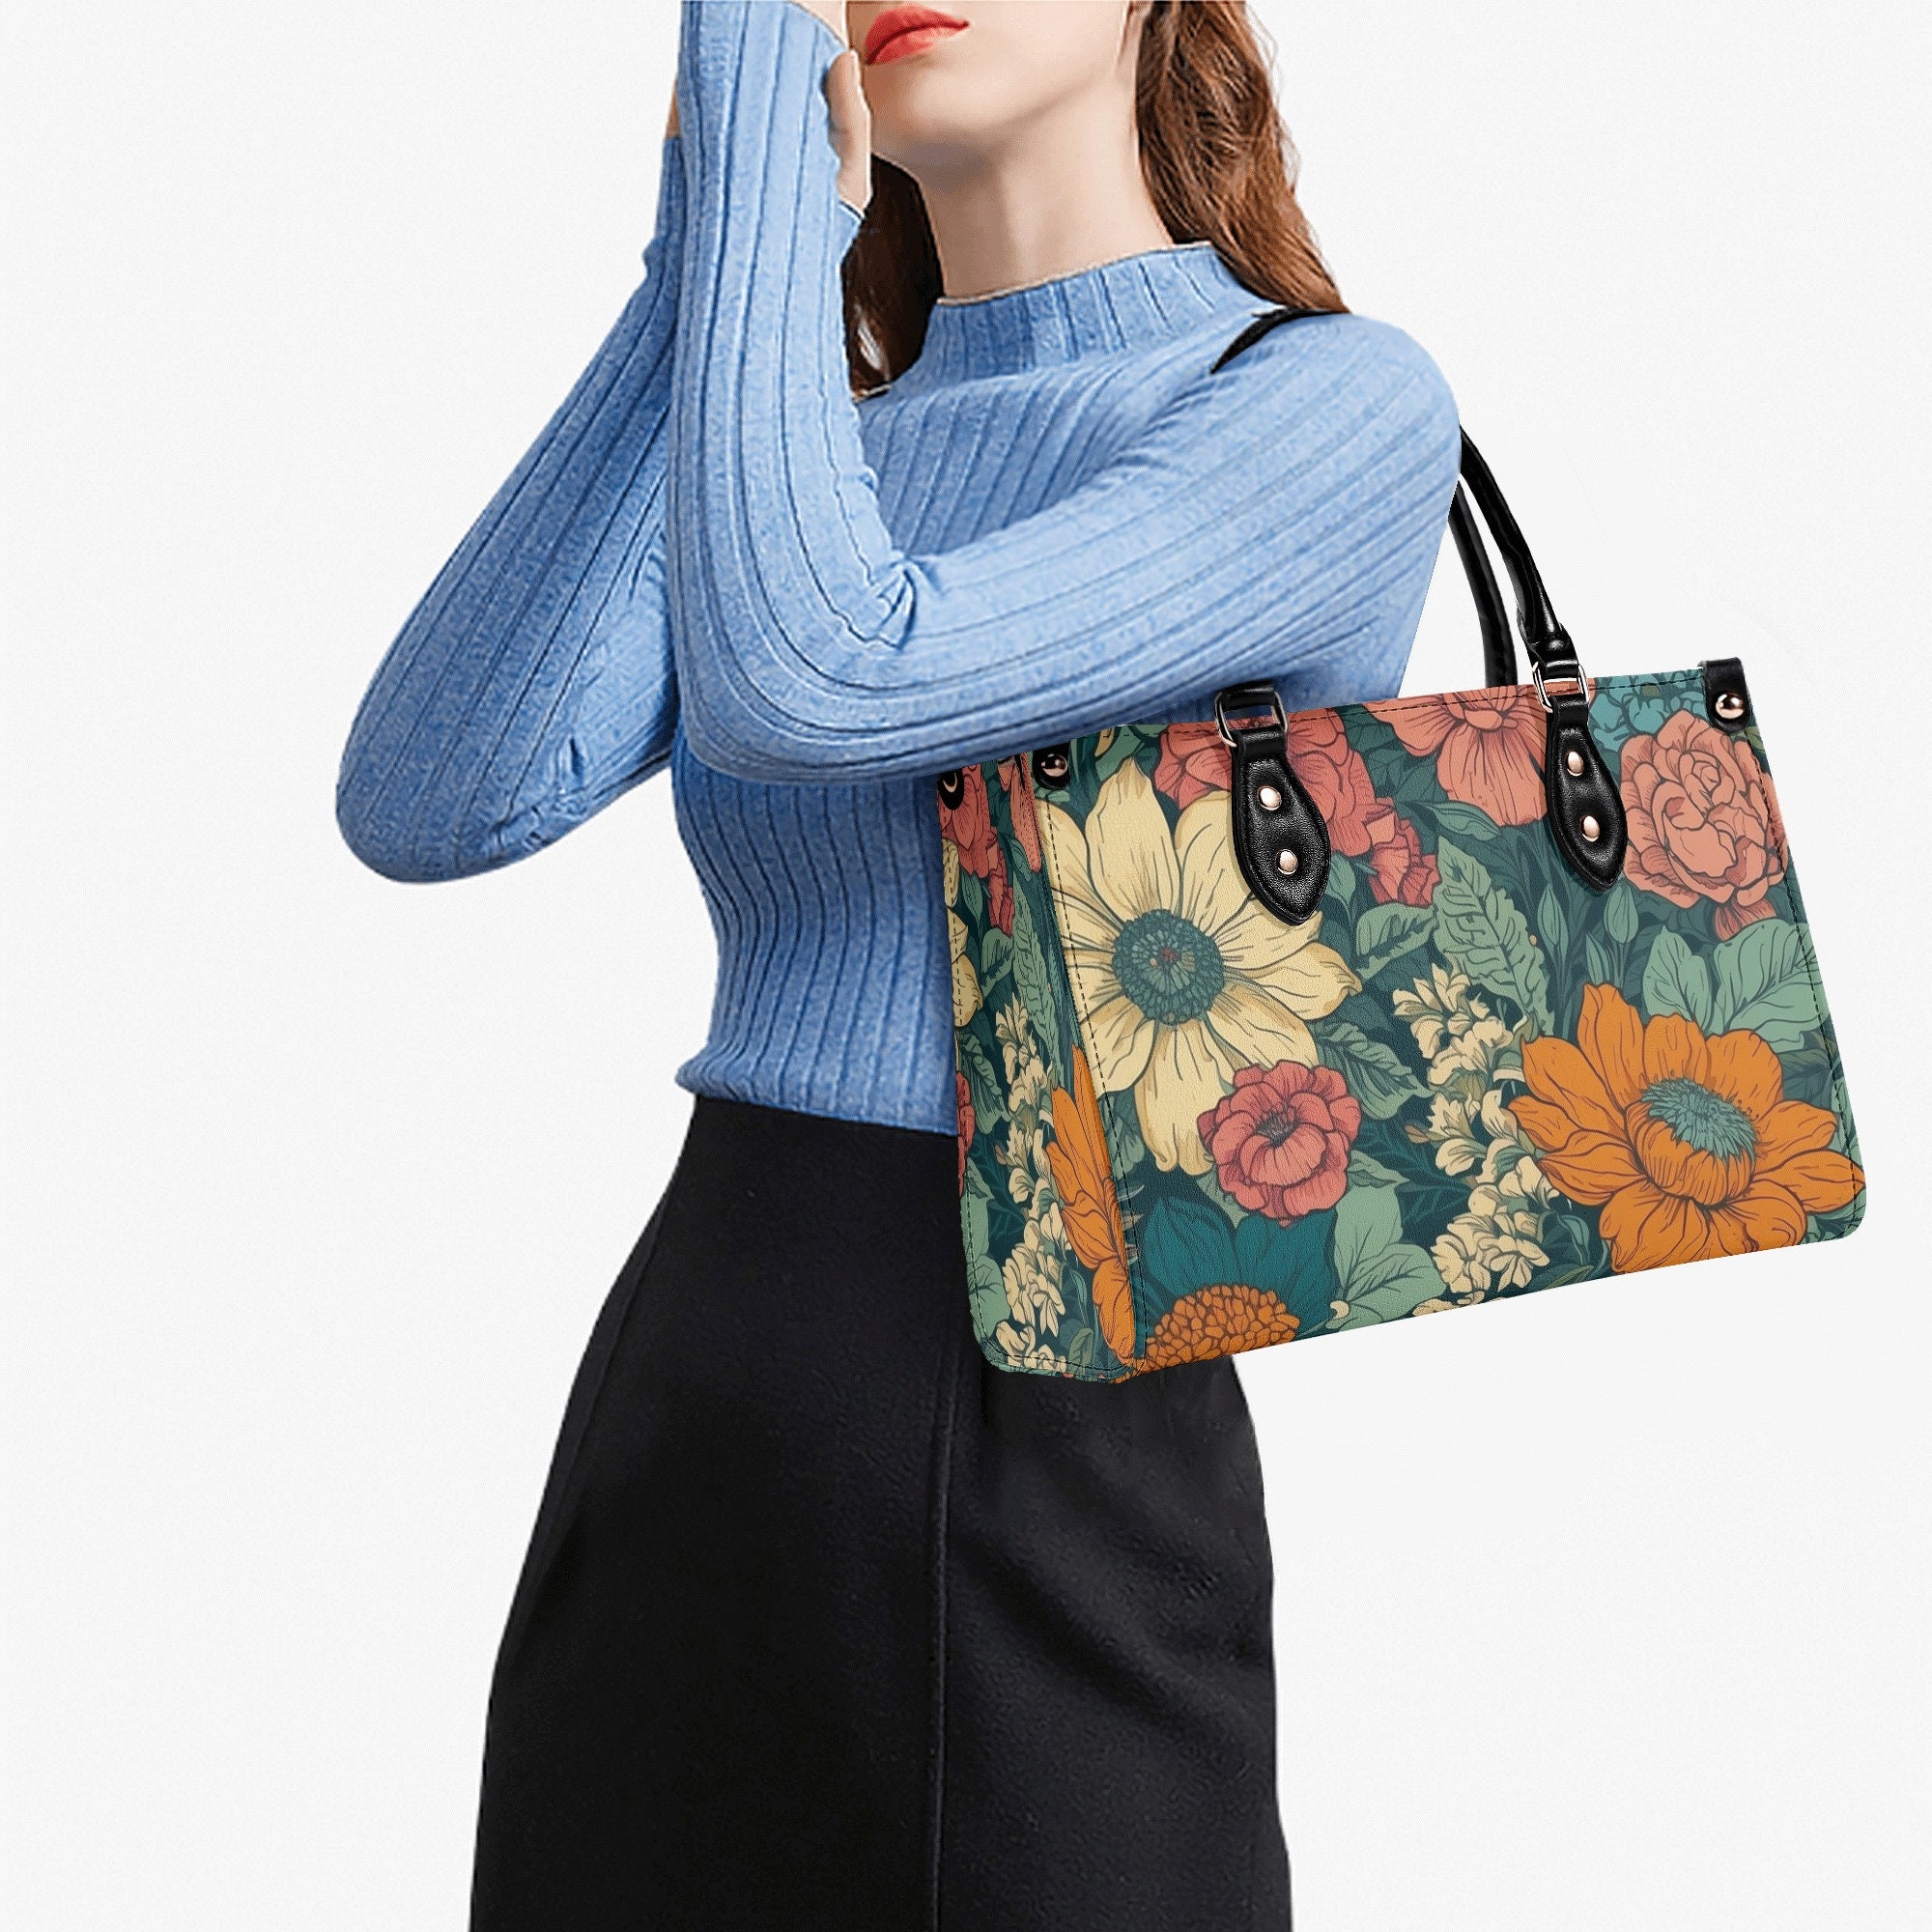 Floral Leather Handbag, gift for mom, gift for her